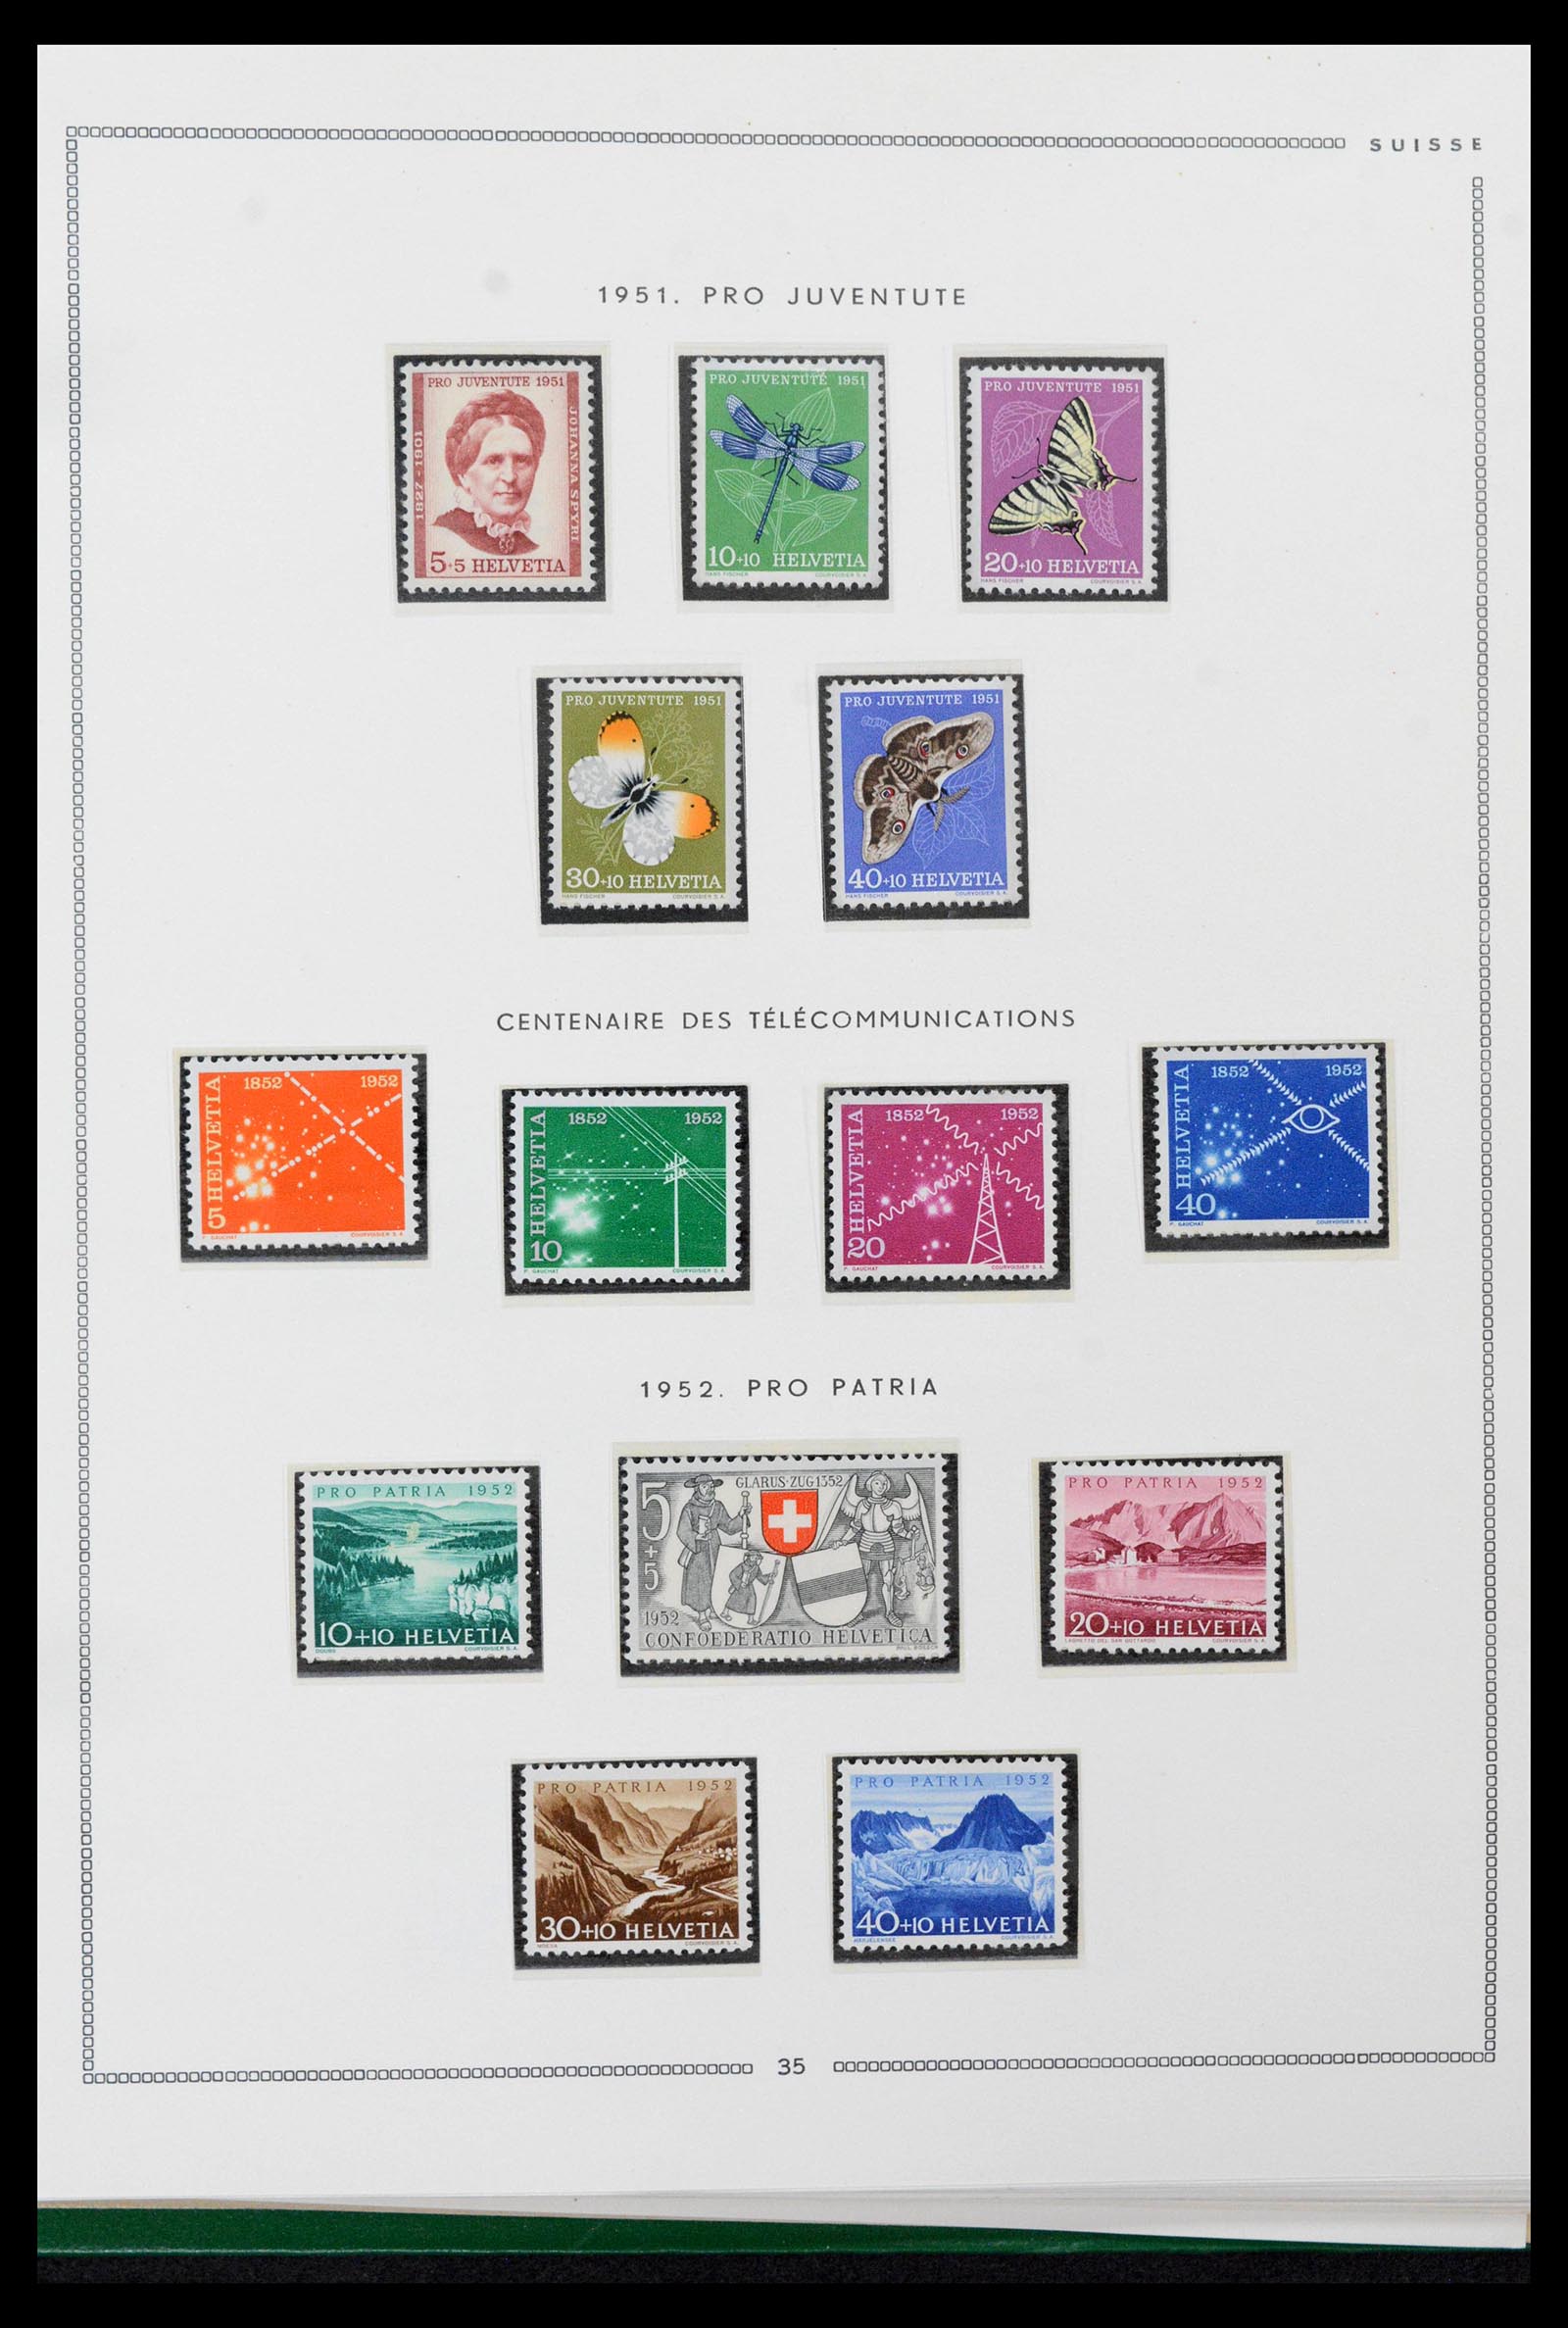 39096 0030 - Stamp collection 39096 Switzerland 1907-1963.